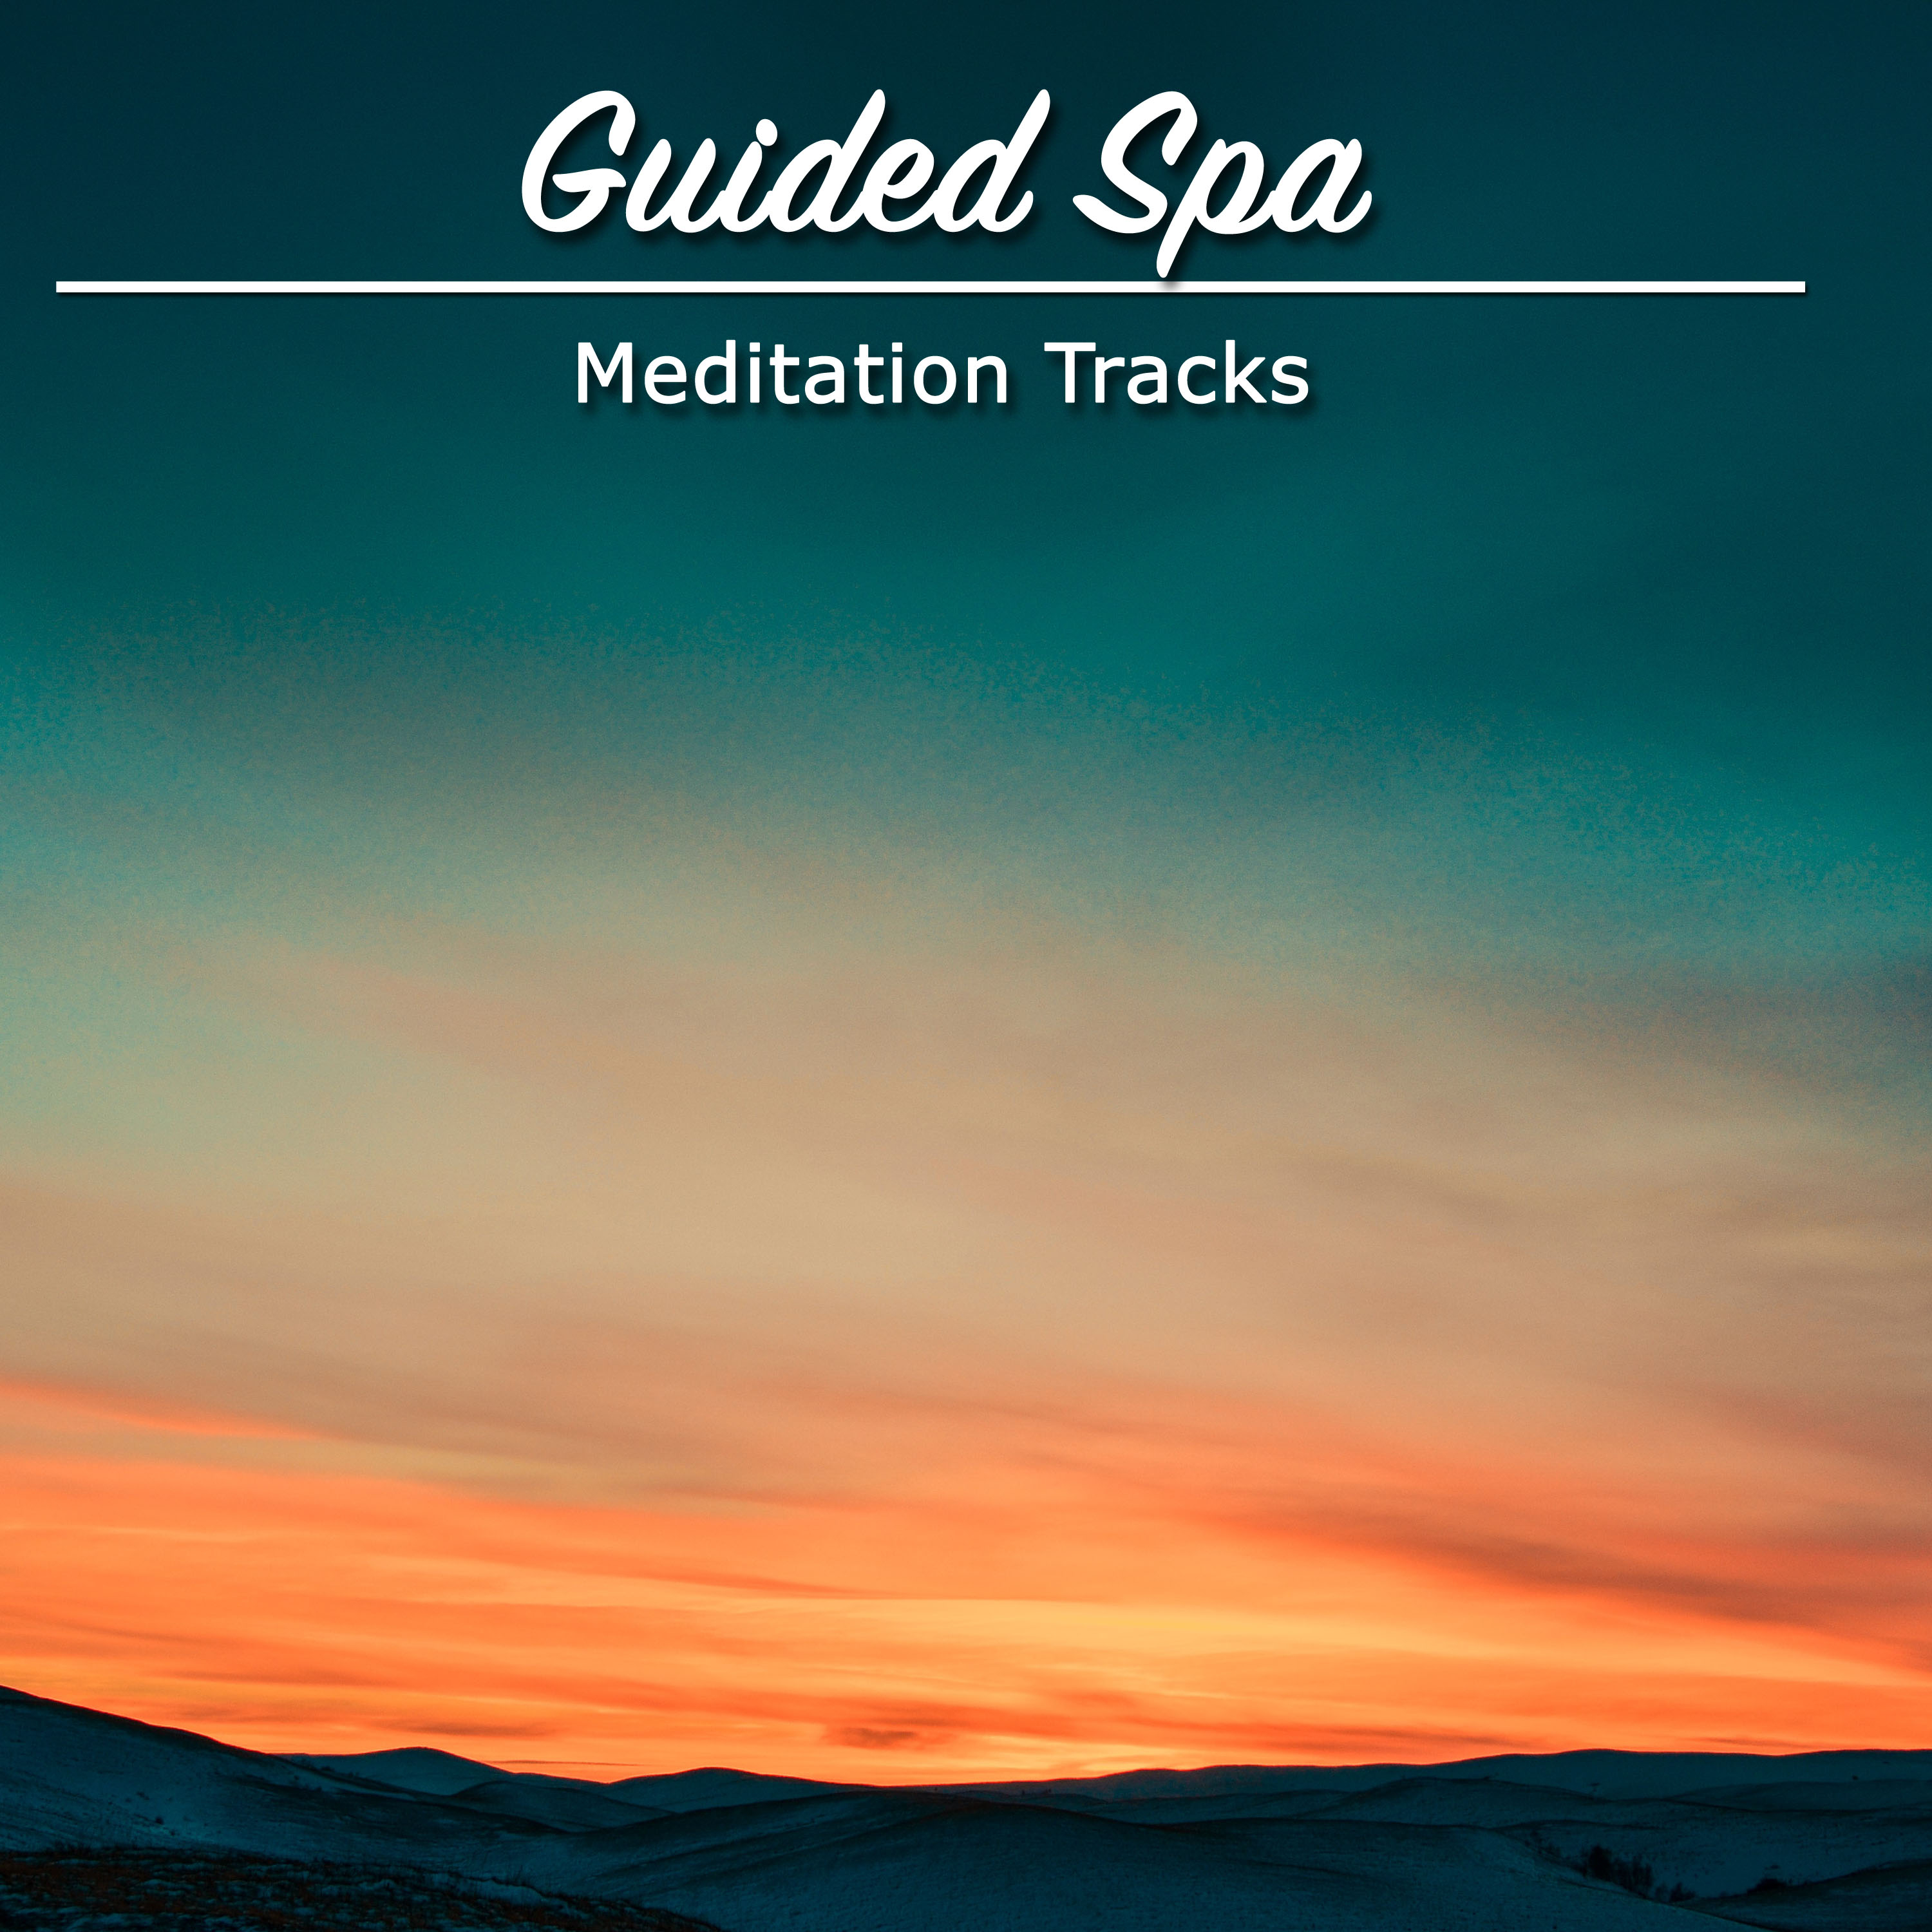 19 Guided Spa Meditation Tracks